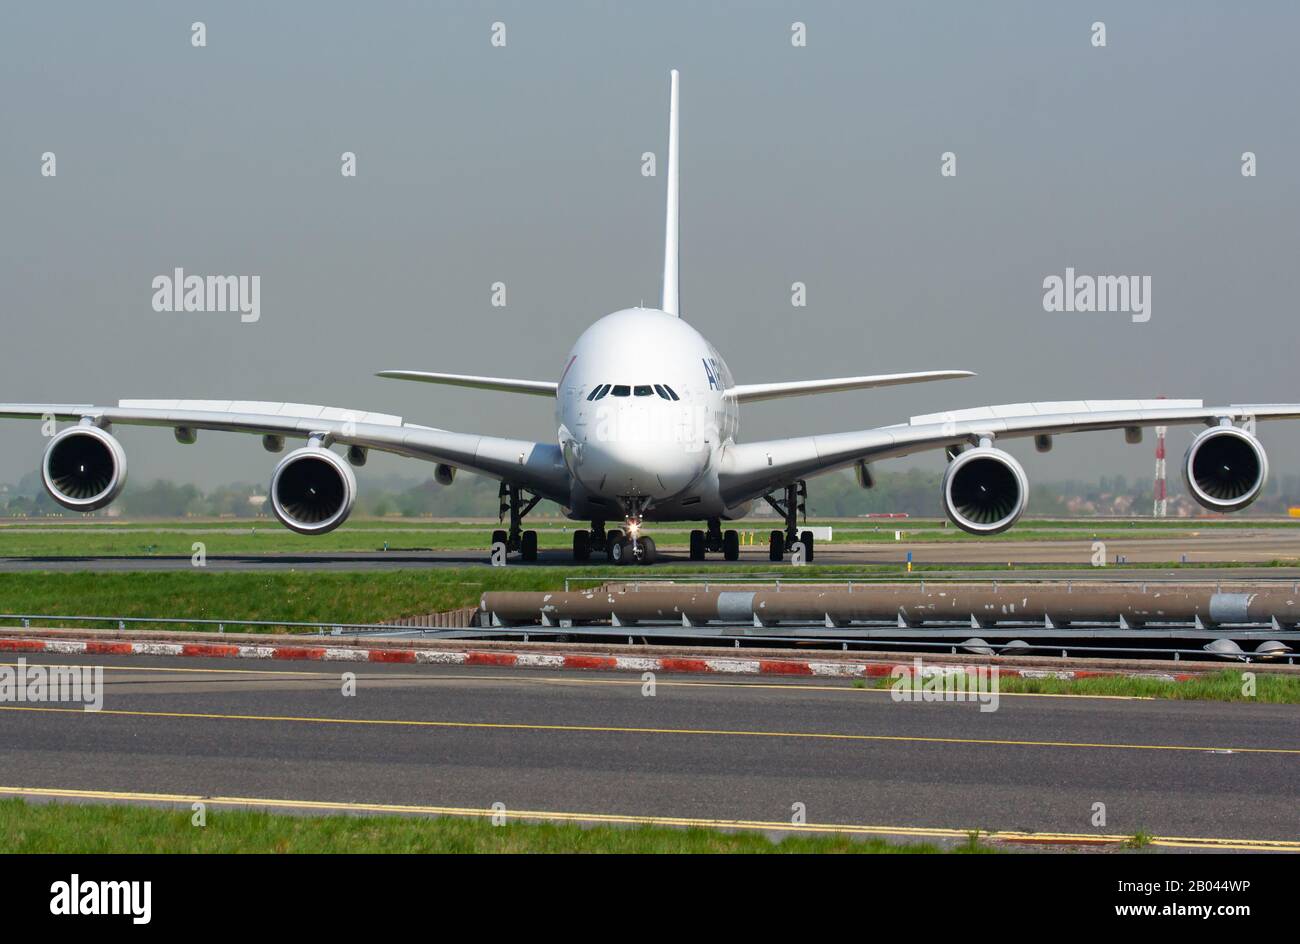 Paris/Frankreich - 24. April 2015: Air France Airbus A380 F-HPJI Passagierflugzeug Ankunft und Landung am Flughafen Paris Charles de Gaulle Stockfoto